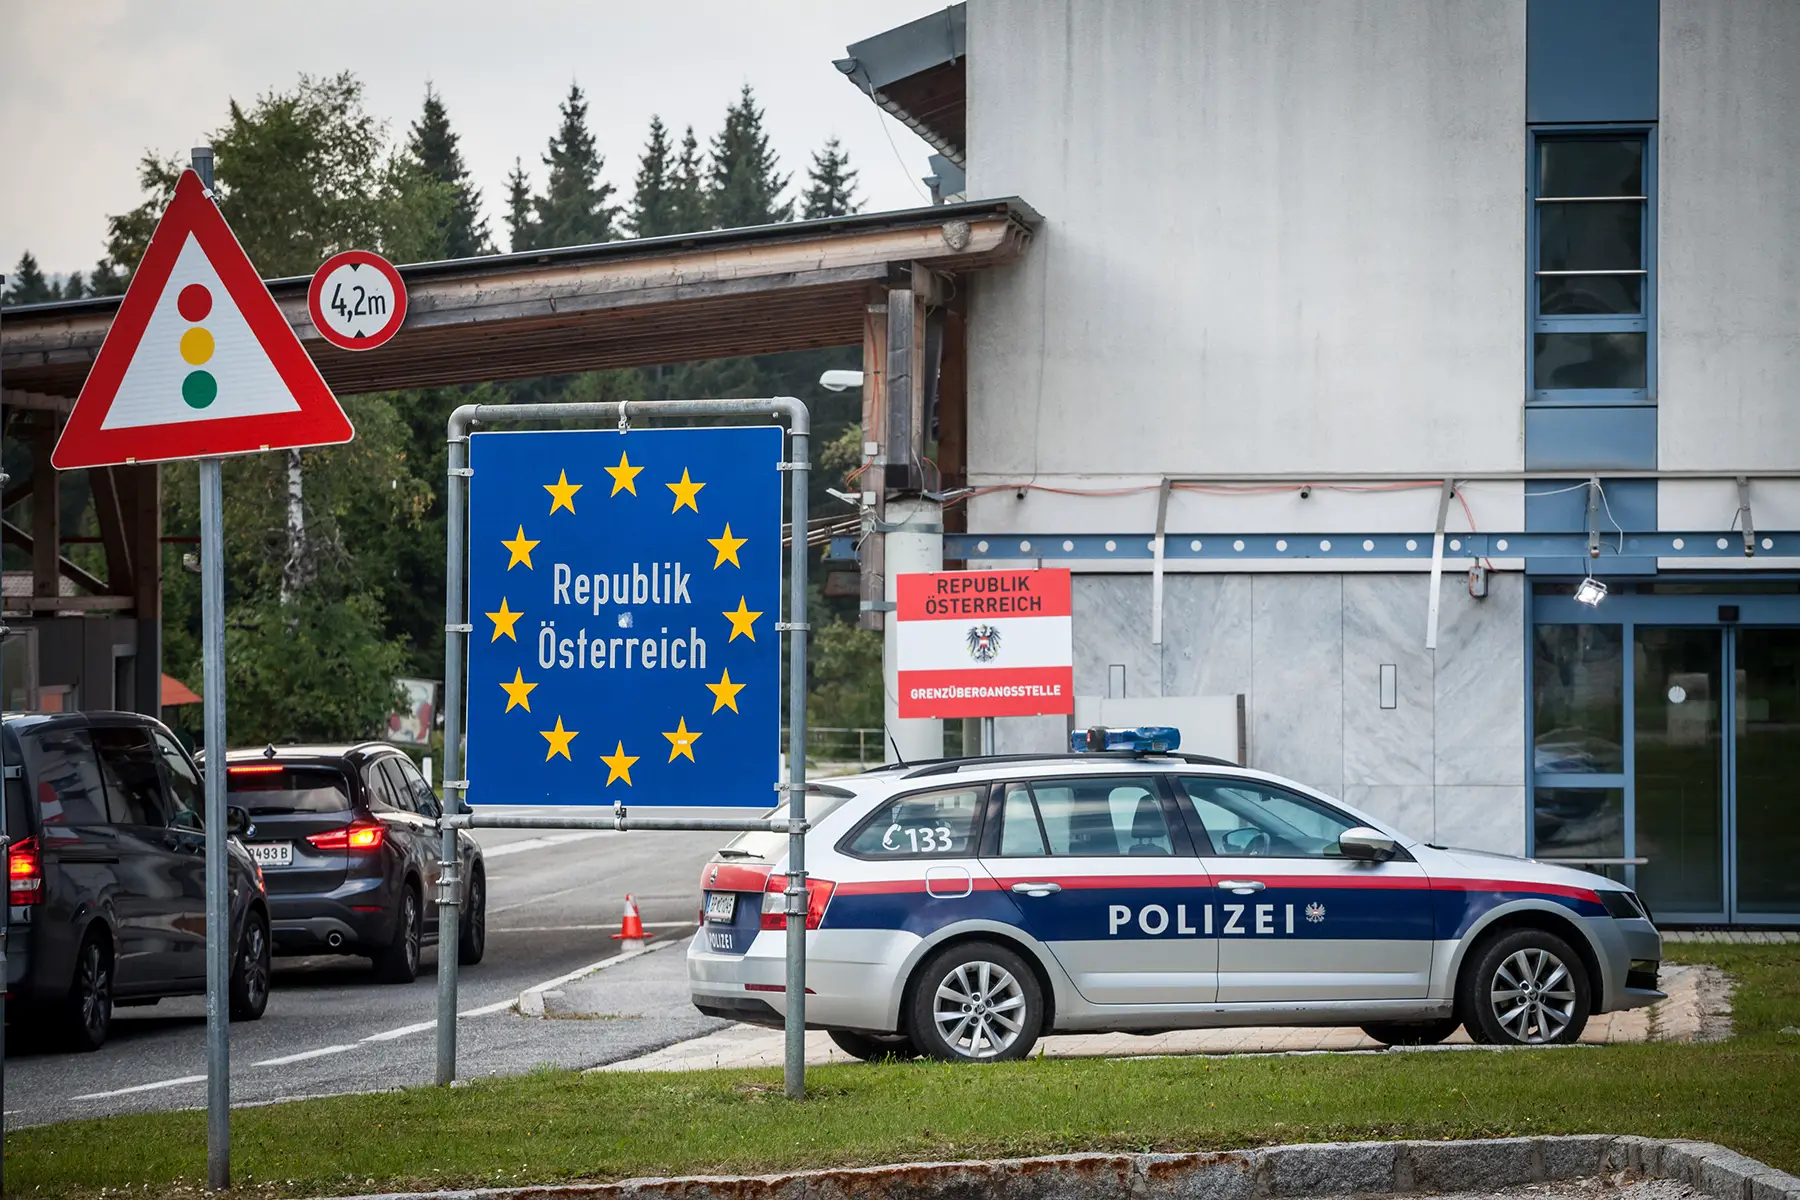 Border control point in Austria